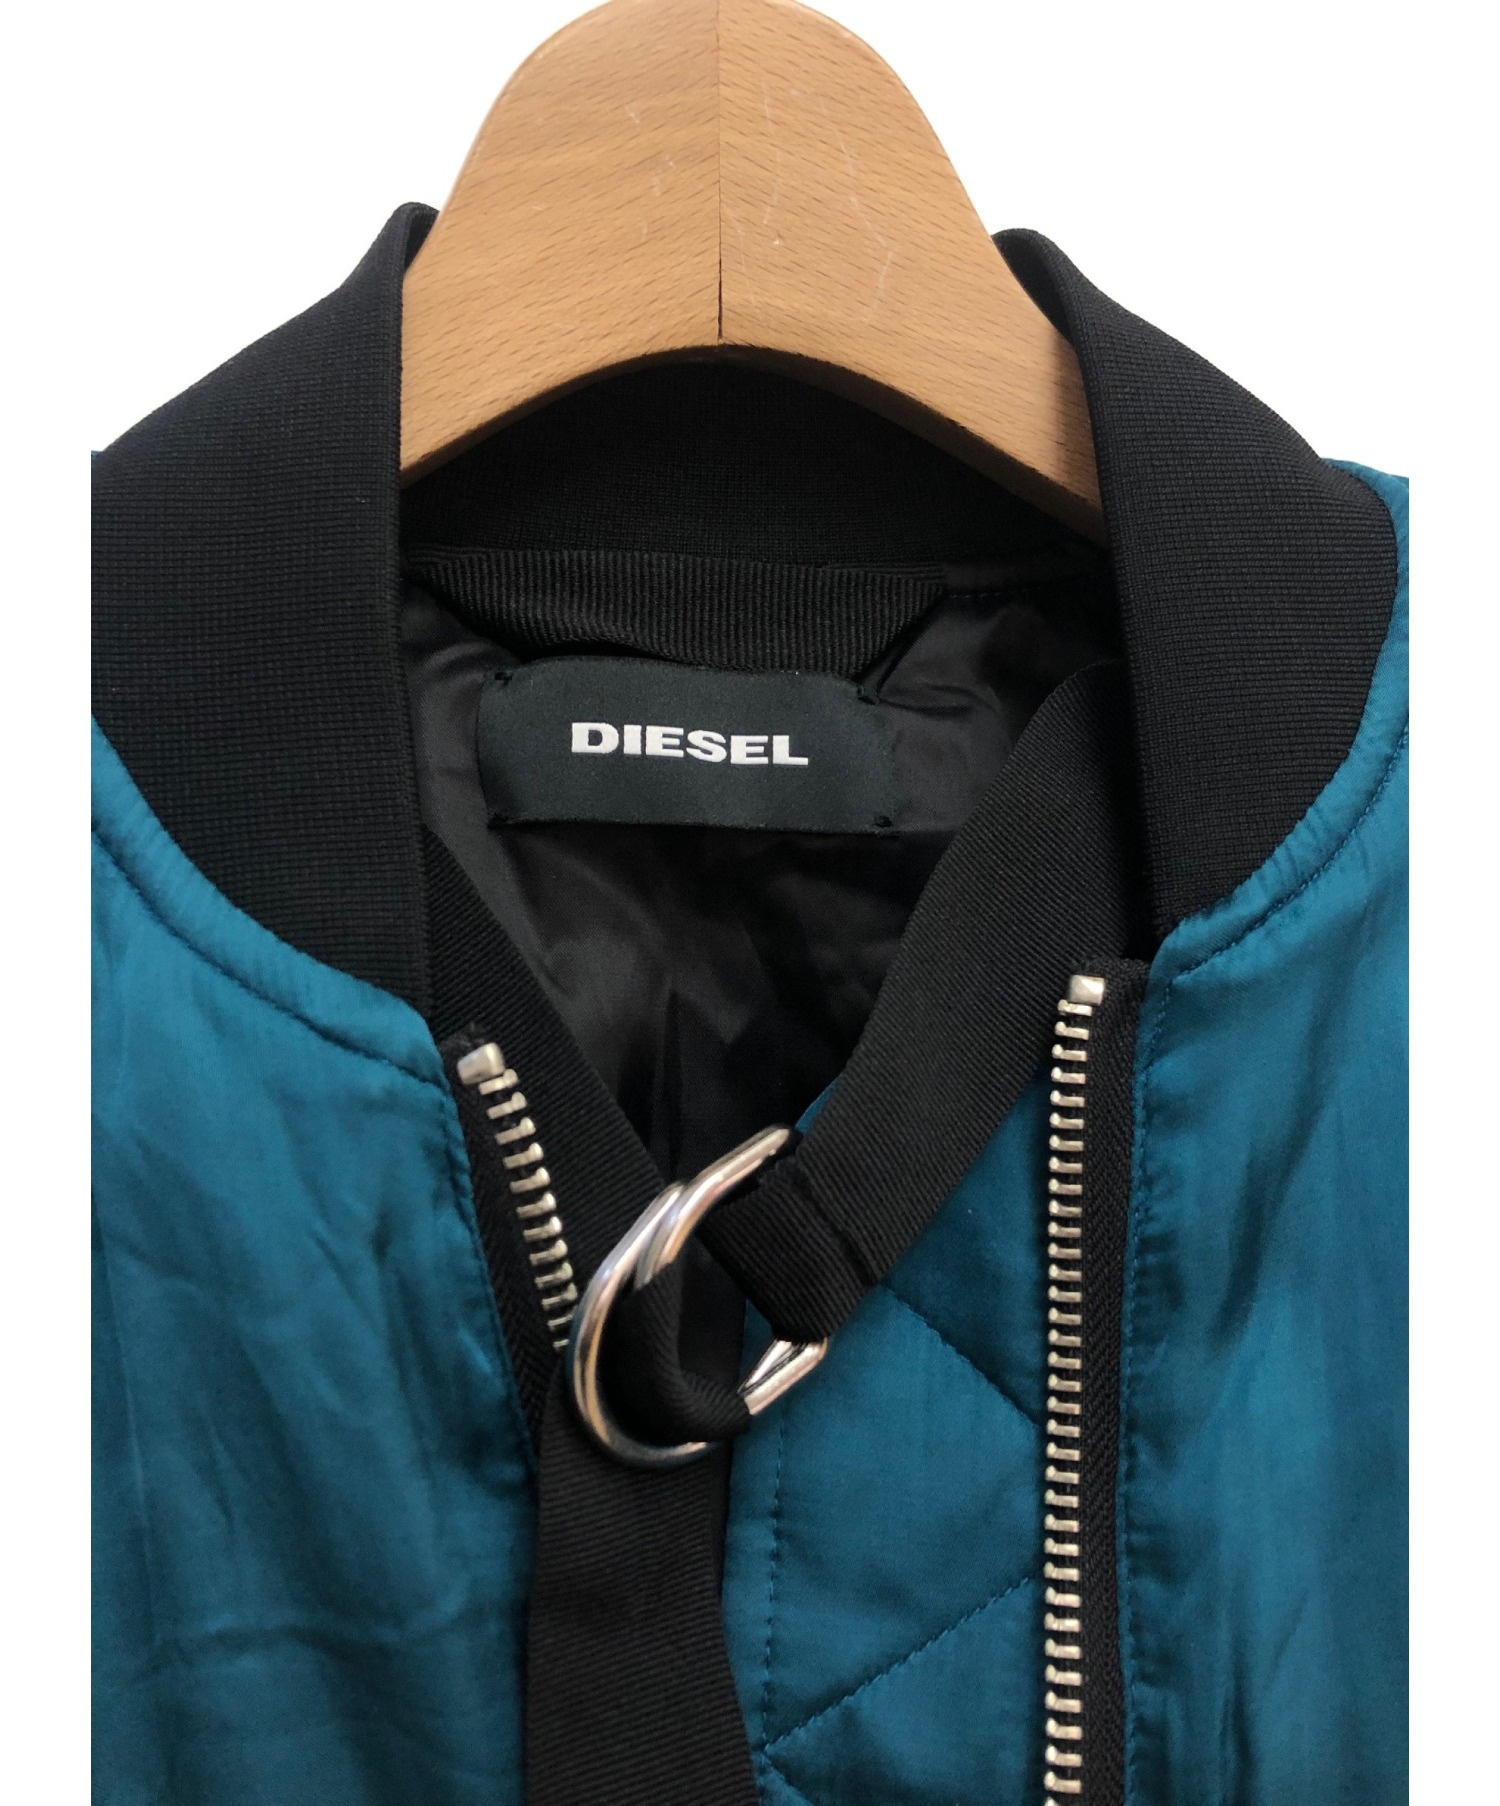 DIESEL (ディーゼル) 19AW ボンバージャケット ブルーグリーン サイズ 